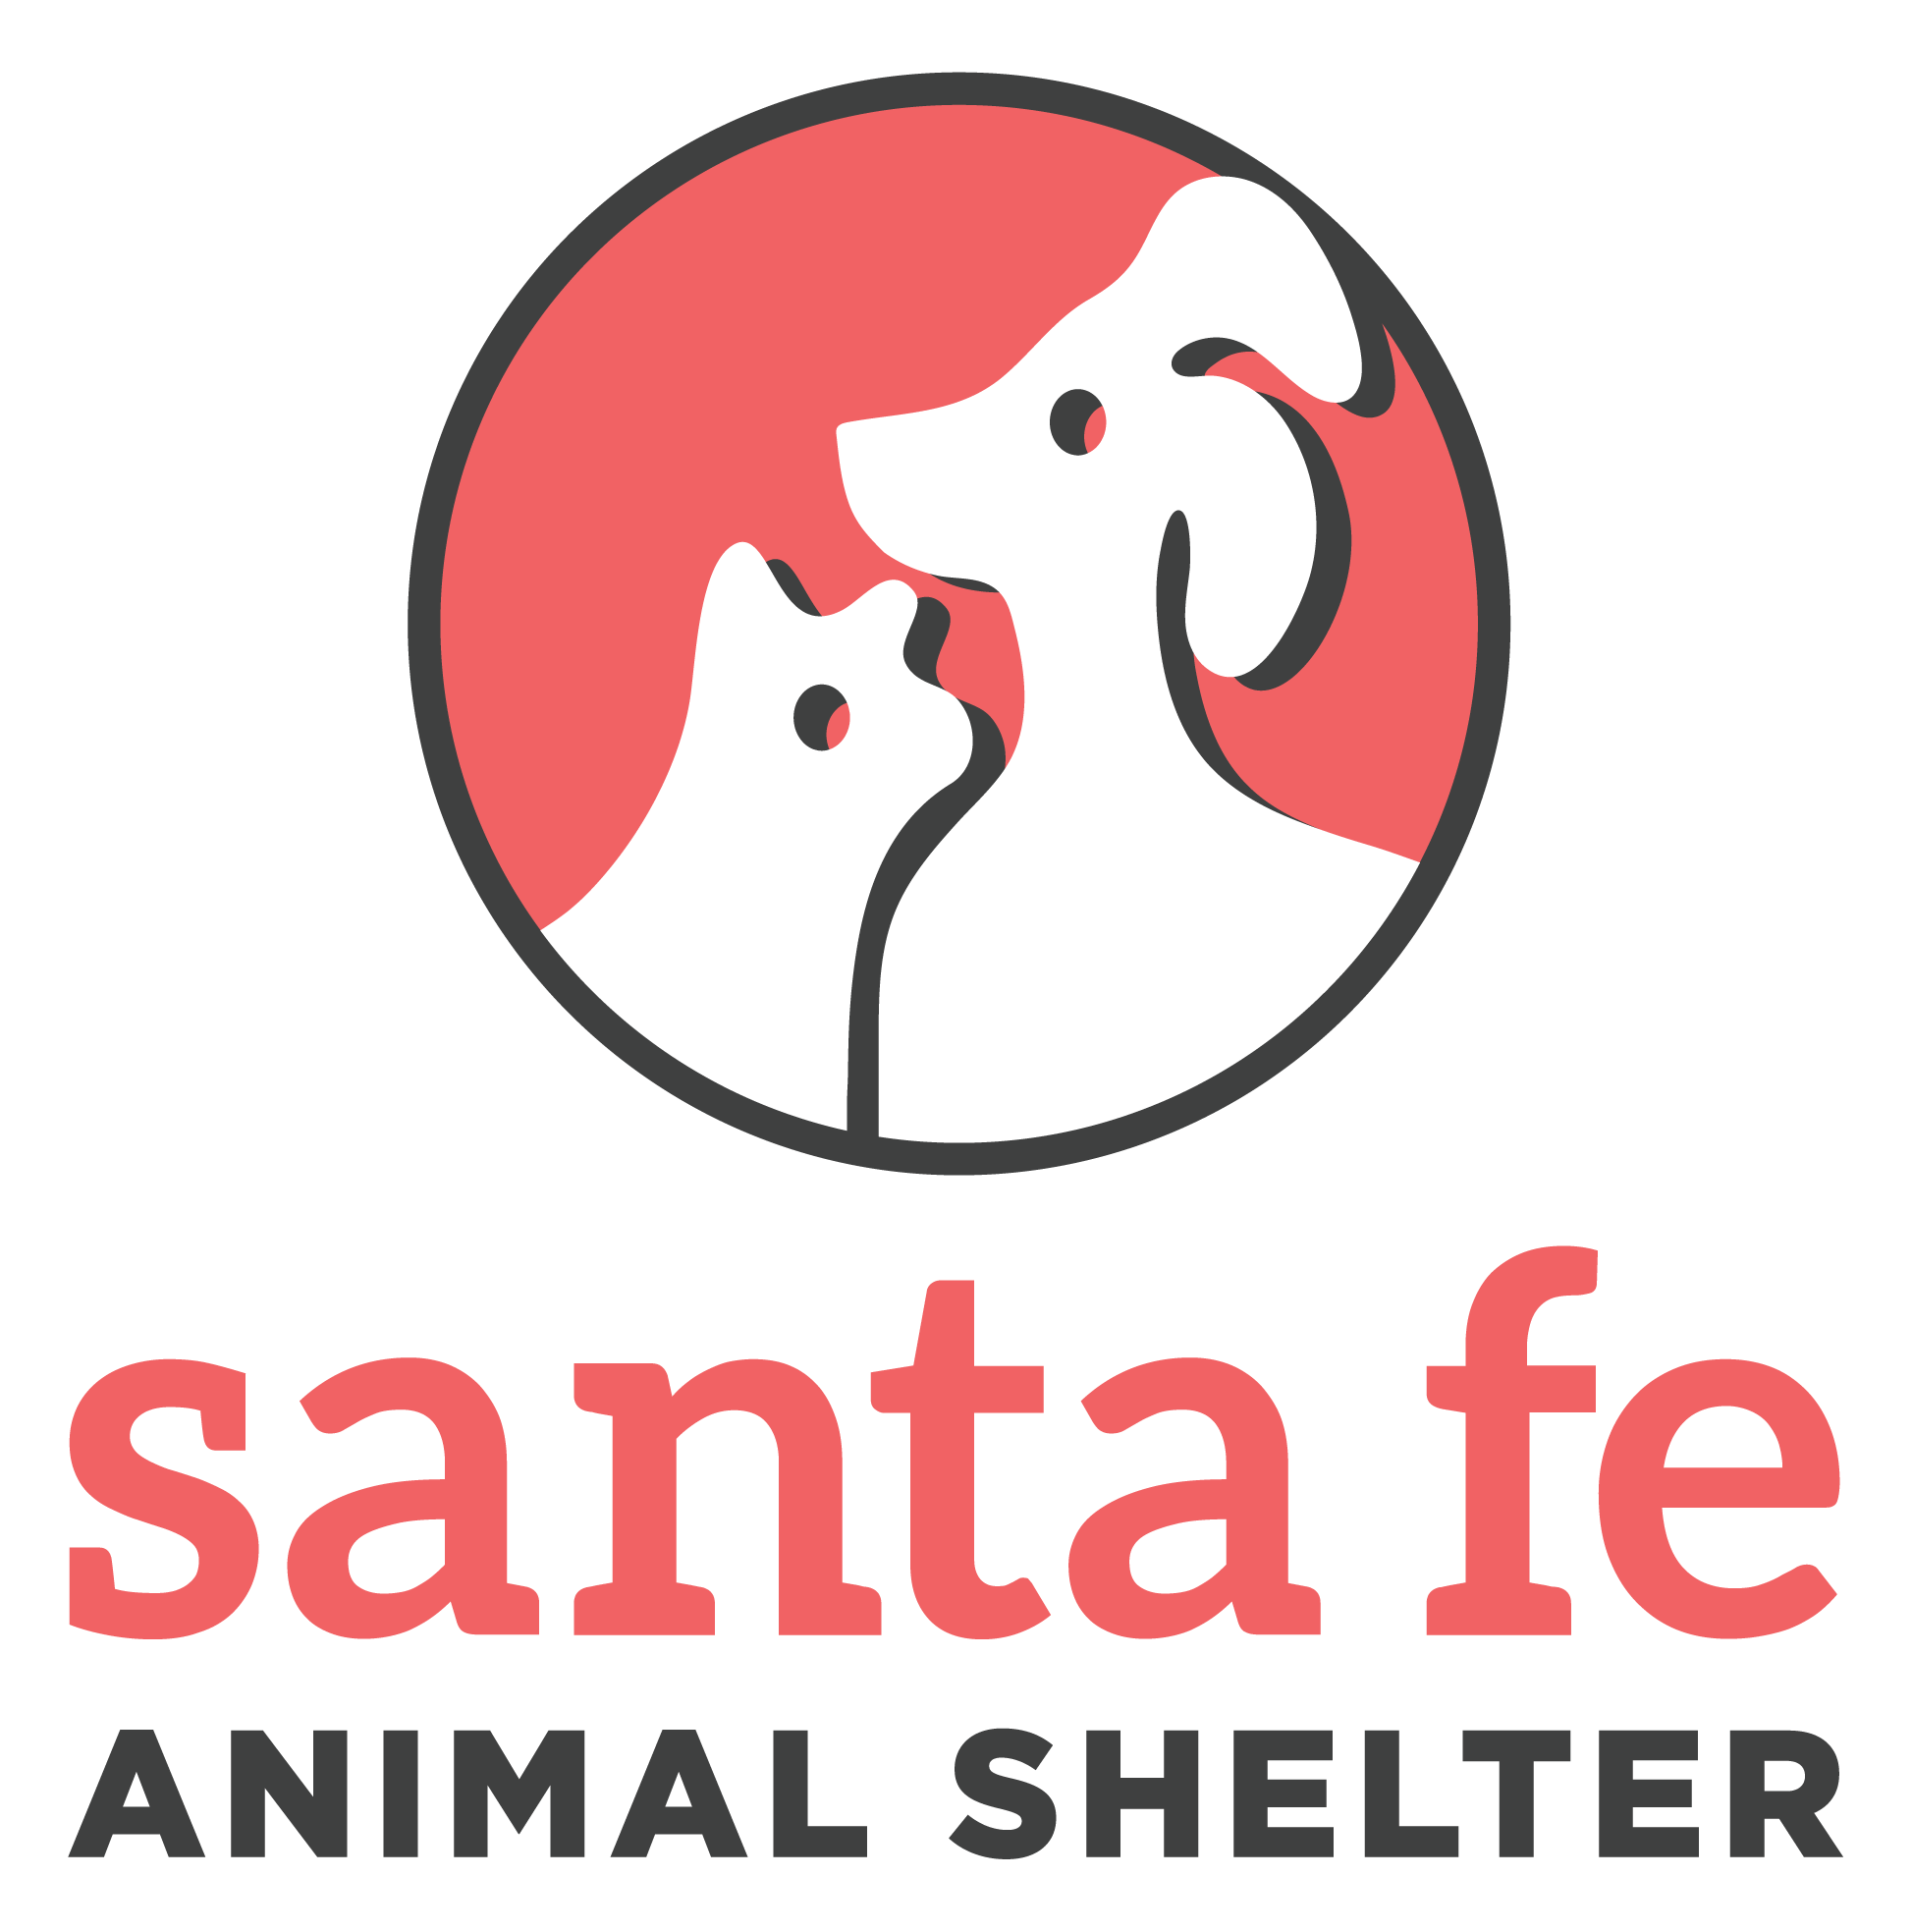 Santa Fe Animal Shelter